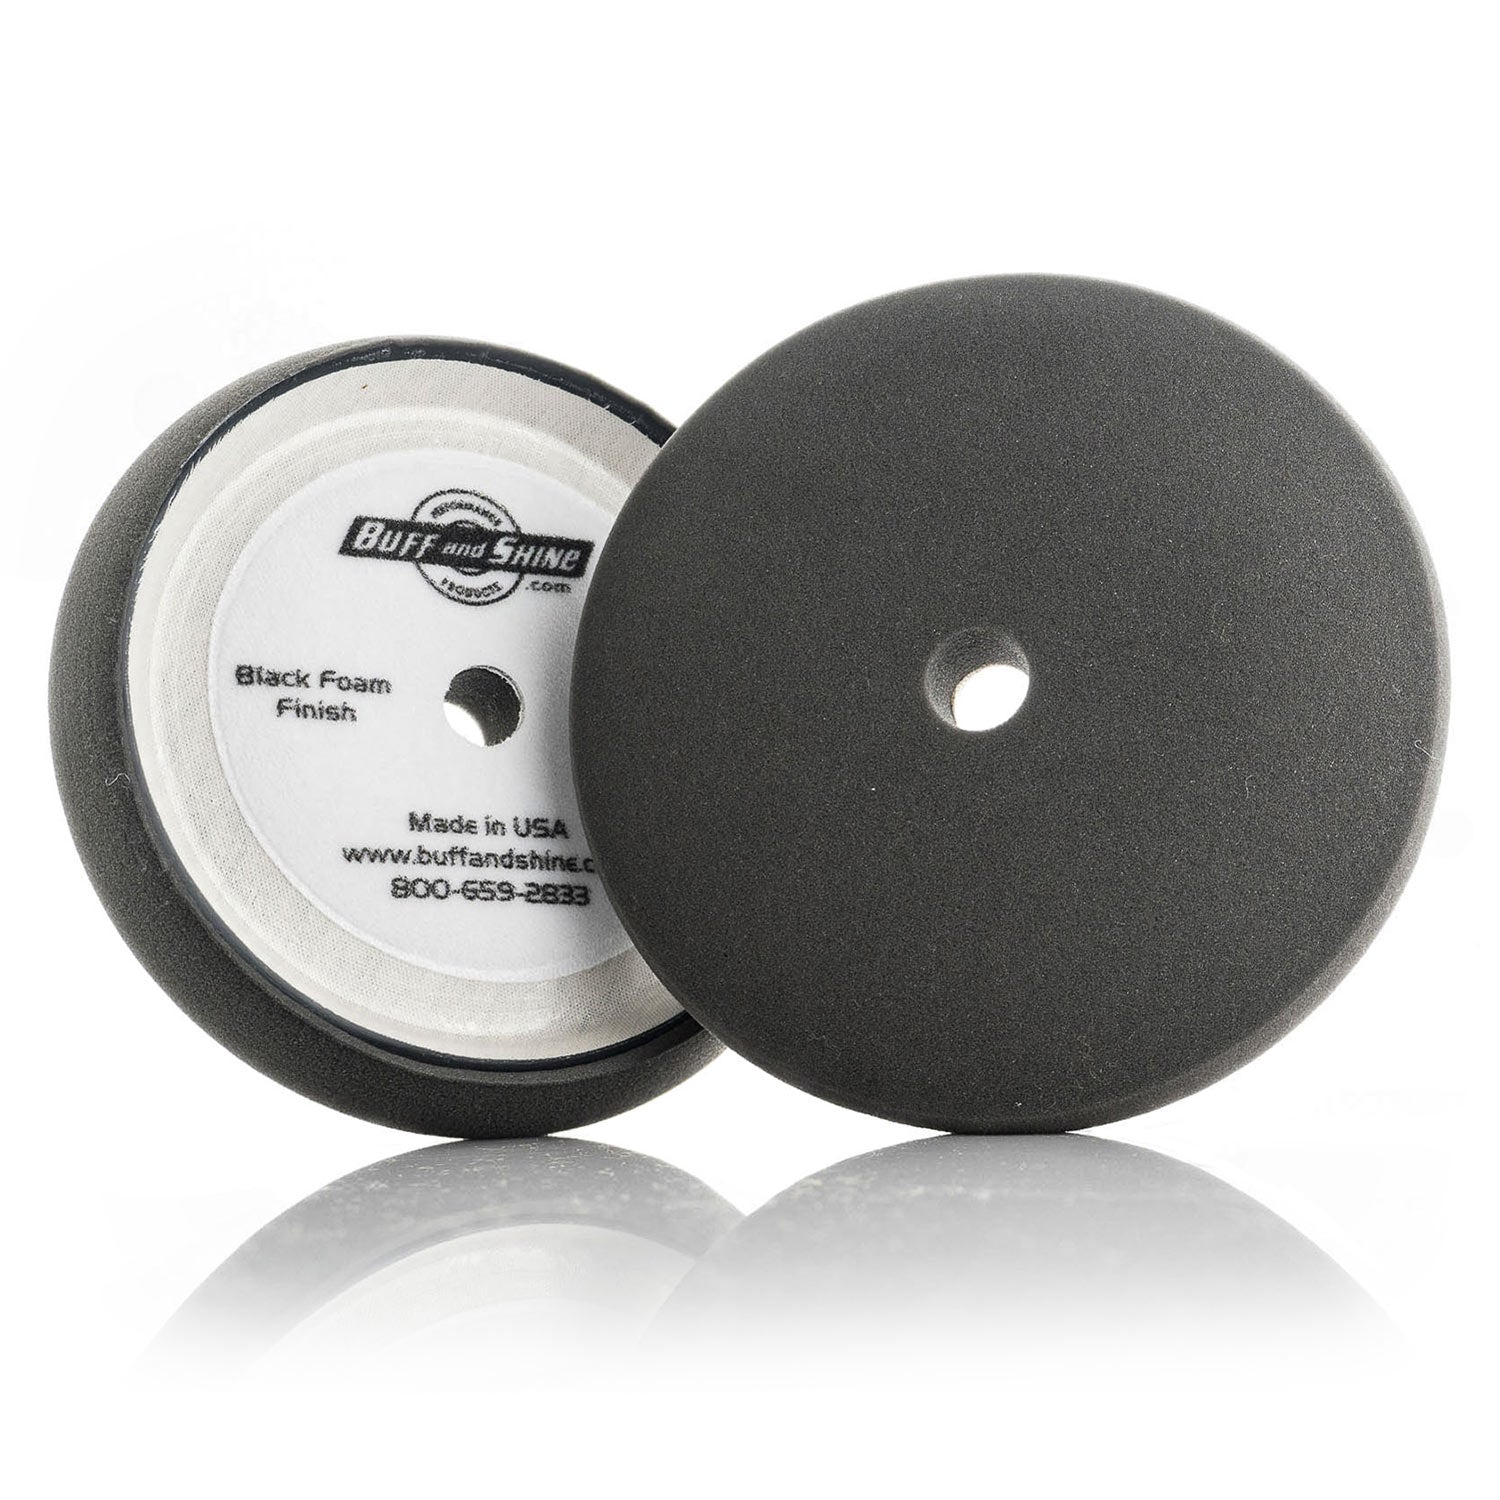 stinger-p02-black-dome-foam-8-inch-polishing-pad-for-rotary